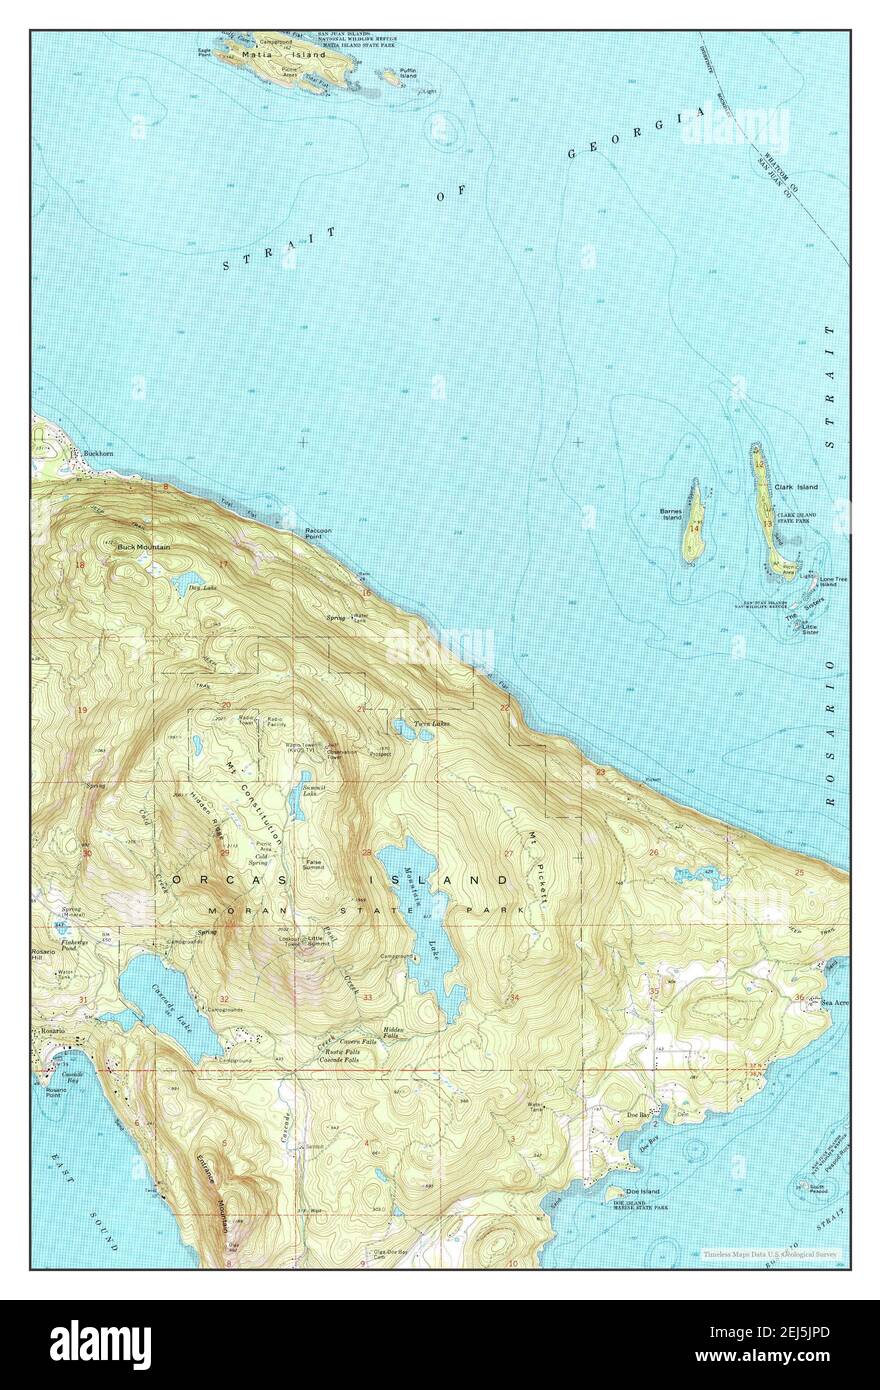 Mt Constitution, Washington, mappa 1978, 1:24000, Stati Uniti d'America da Timeless Maps, dati U.S. Geological Survey Foto Stock